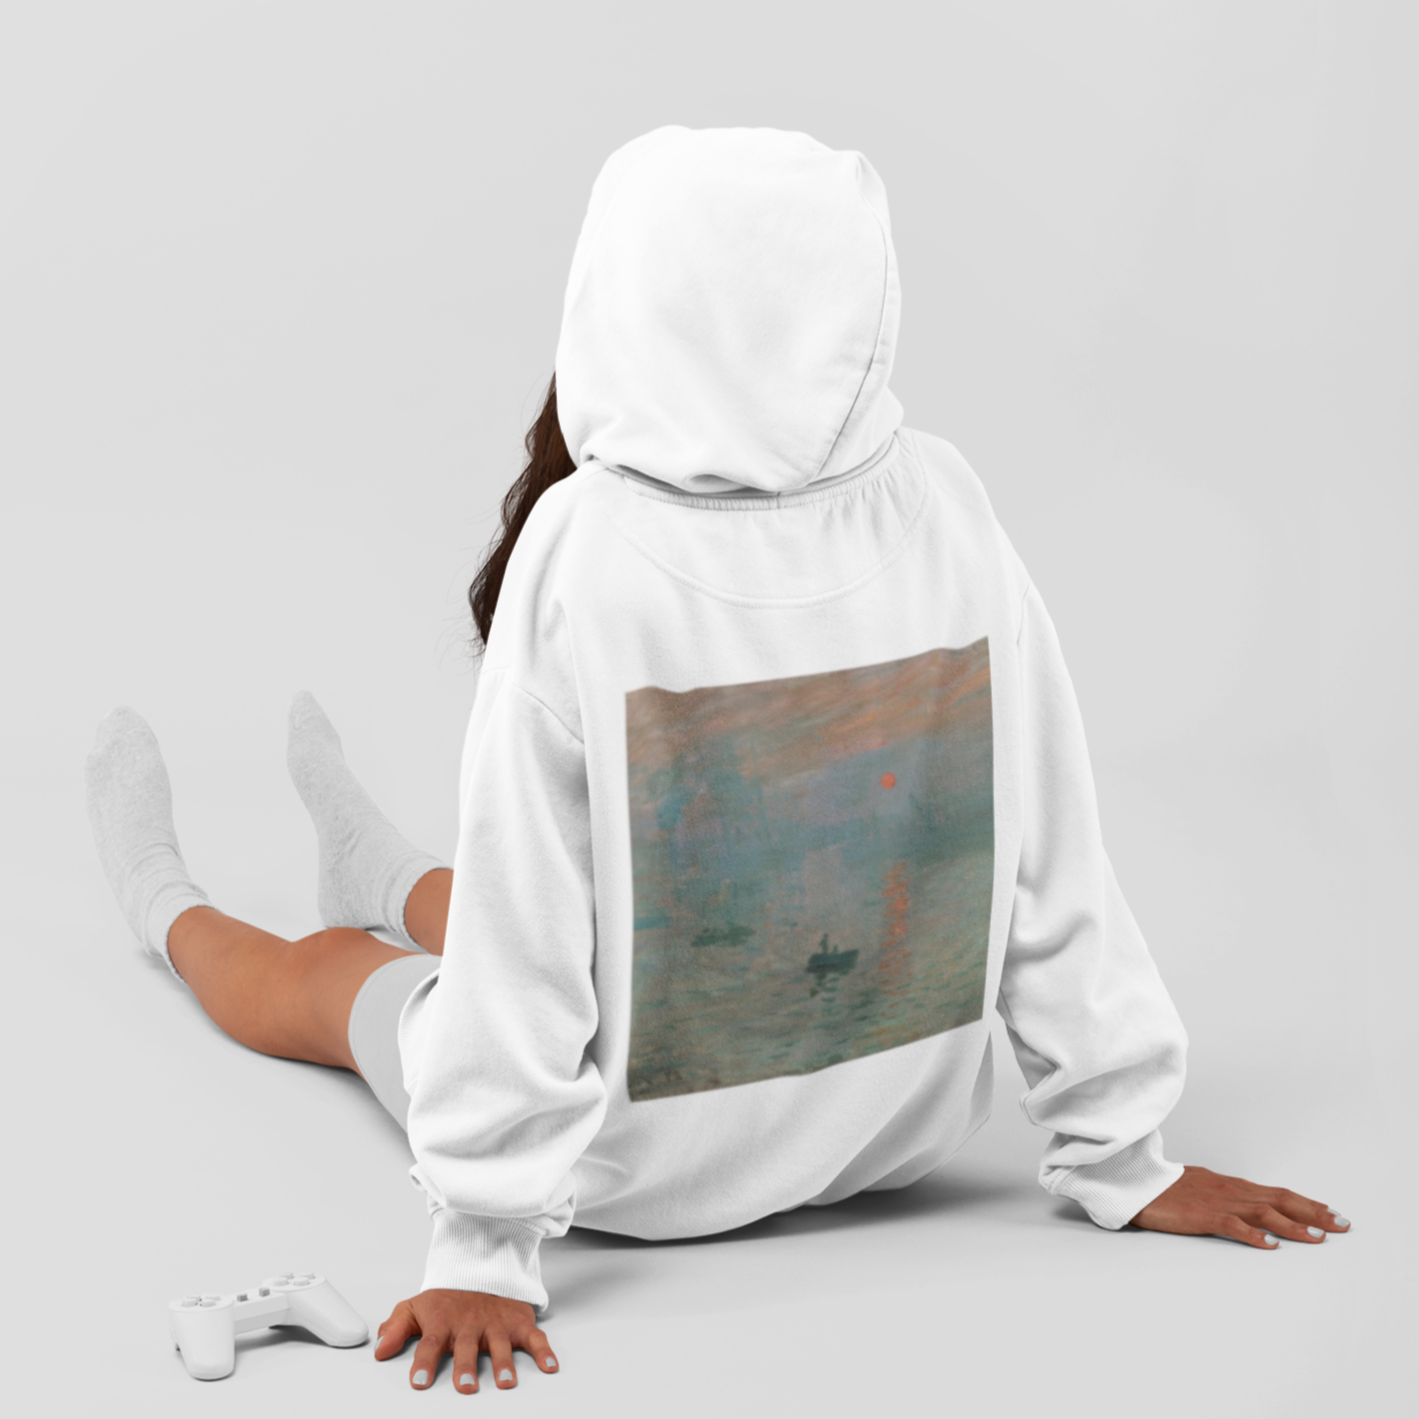 Monet  - The signature hoodie